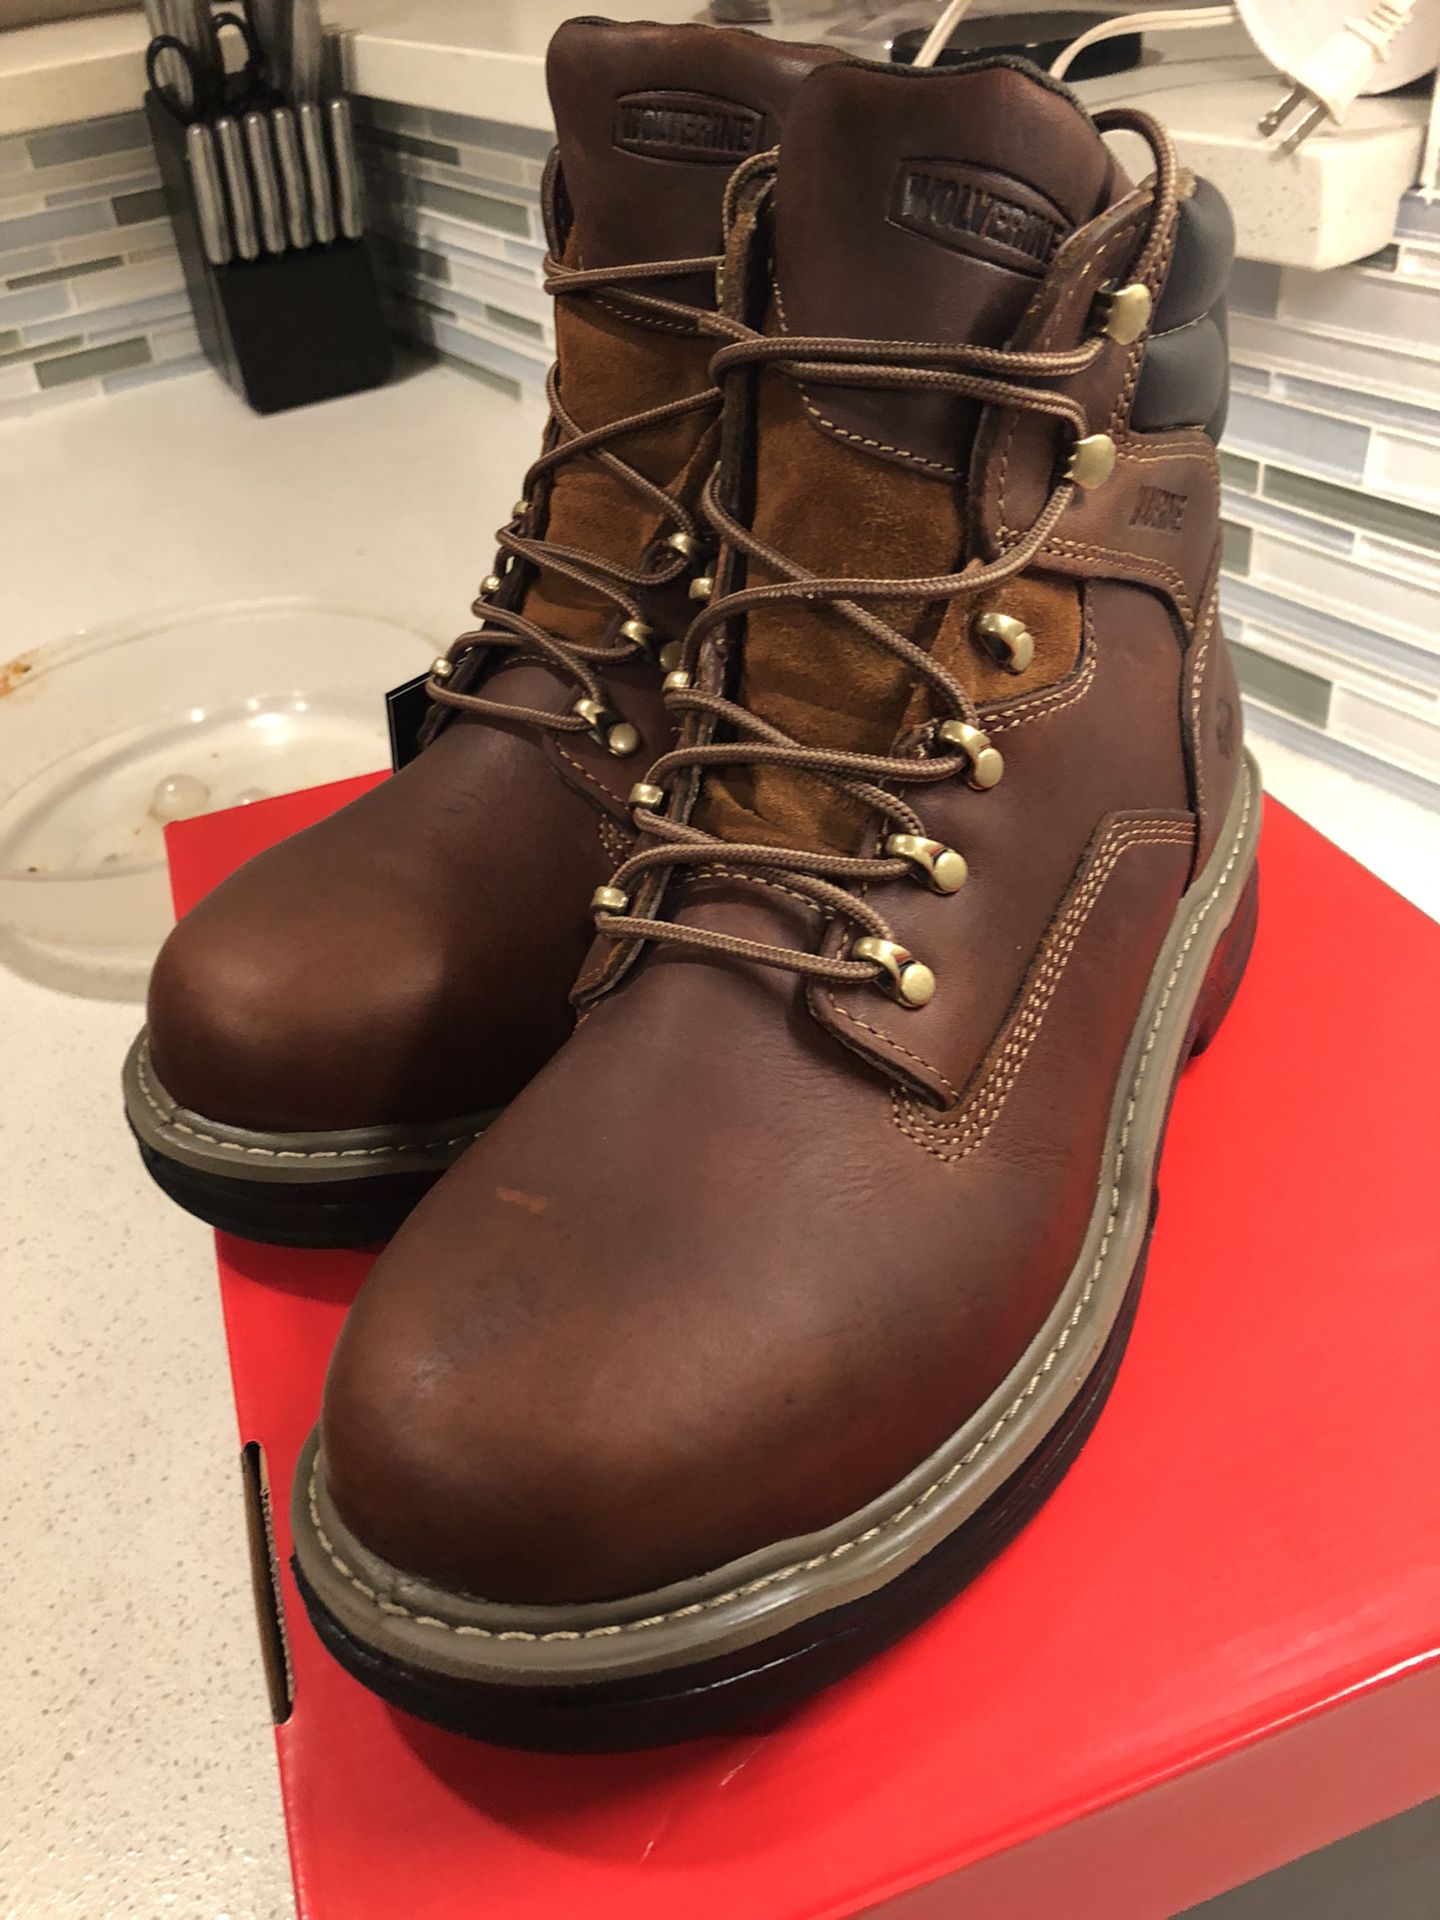 Wolverine Work Boots 6” Steel Toe